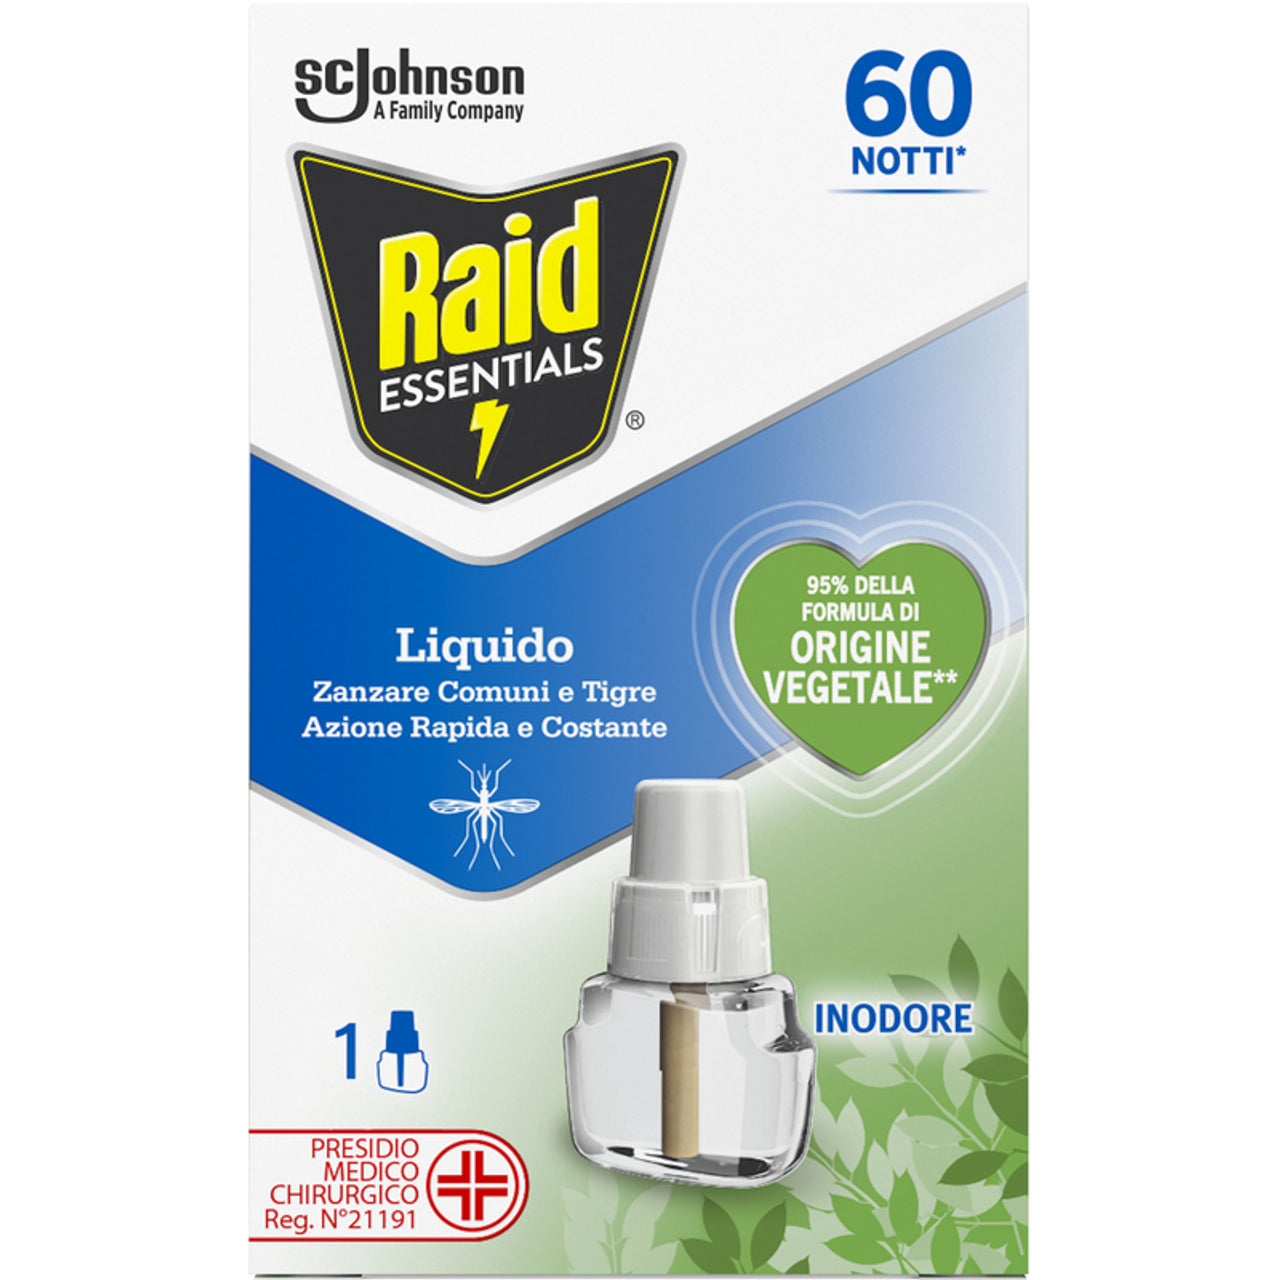 Raid Essentials Electrical Liquid Charging inordore 60 nuits 36 ml